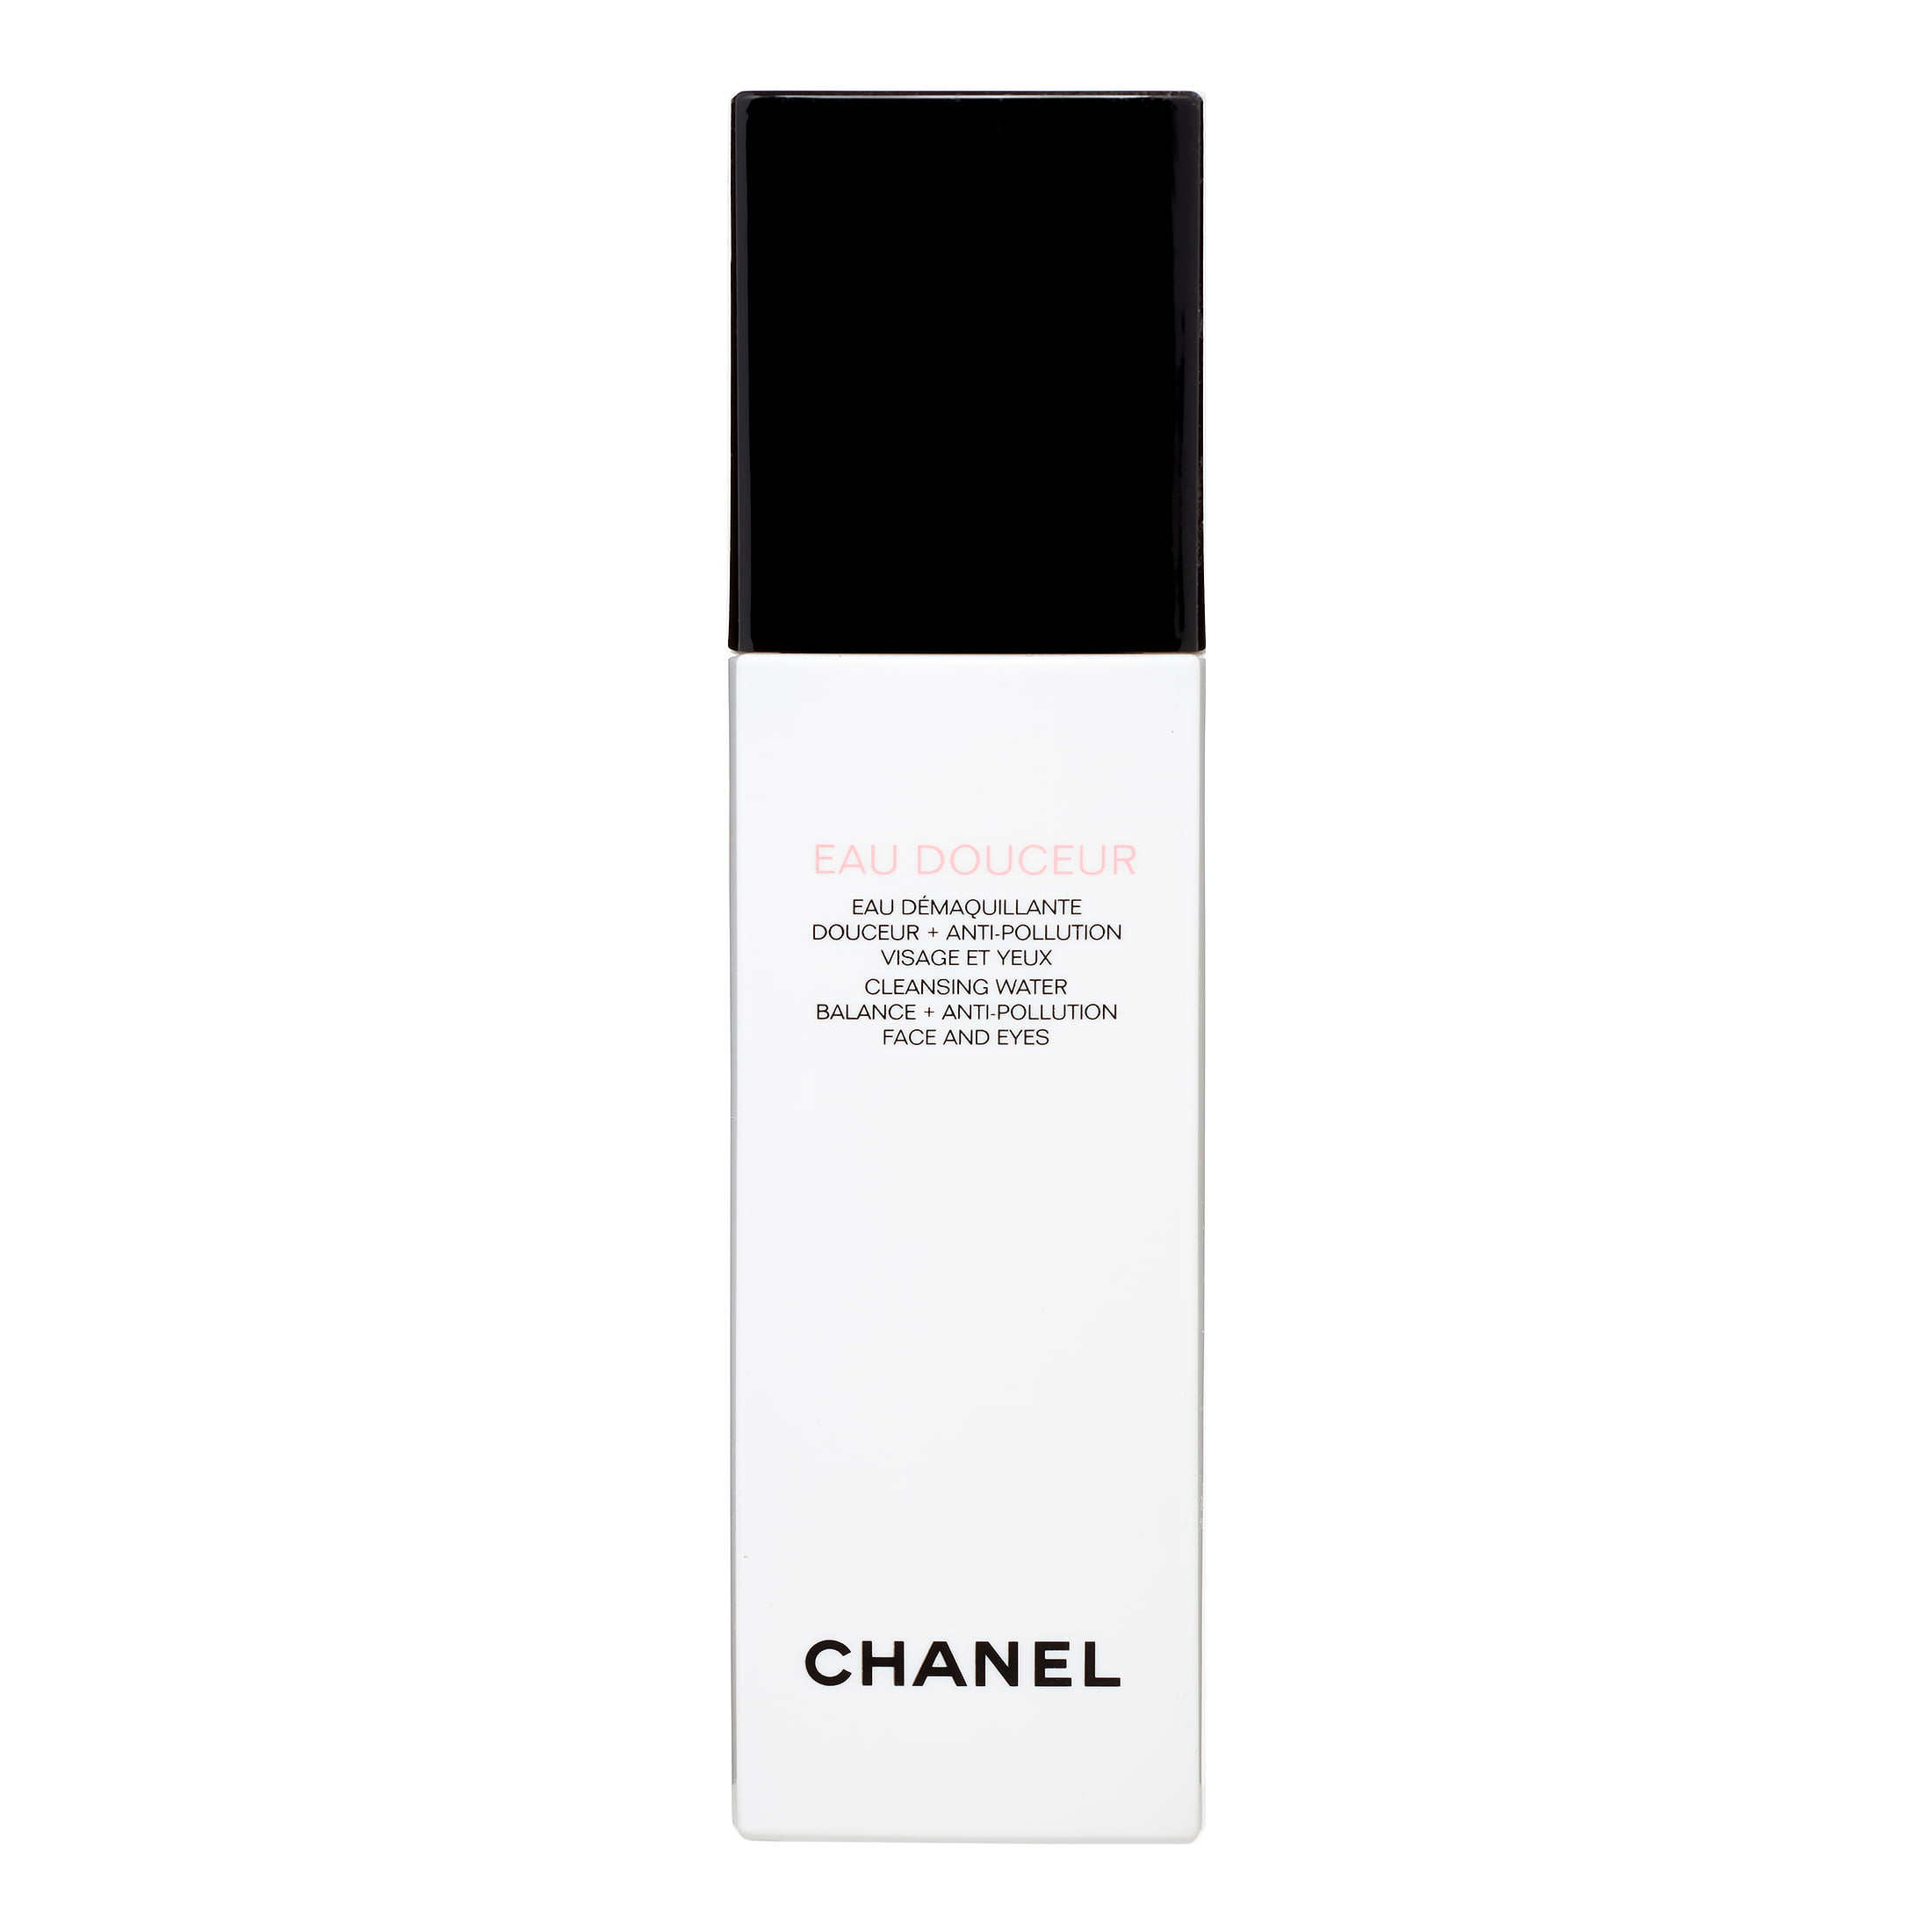 Chanel Eau Douceur Cleansing Water, Balance + Anti-Pollution, 5 Oz -  Walmart.com